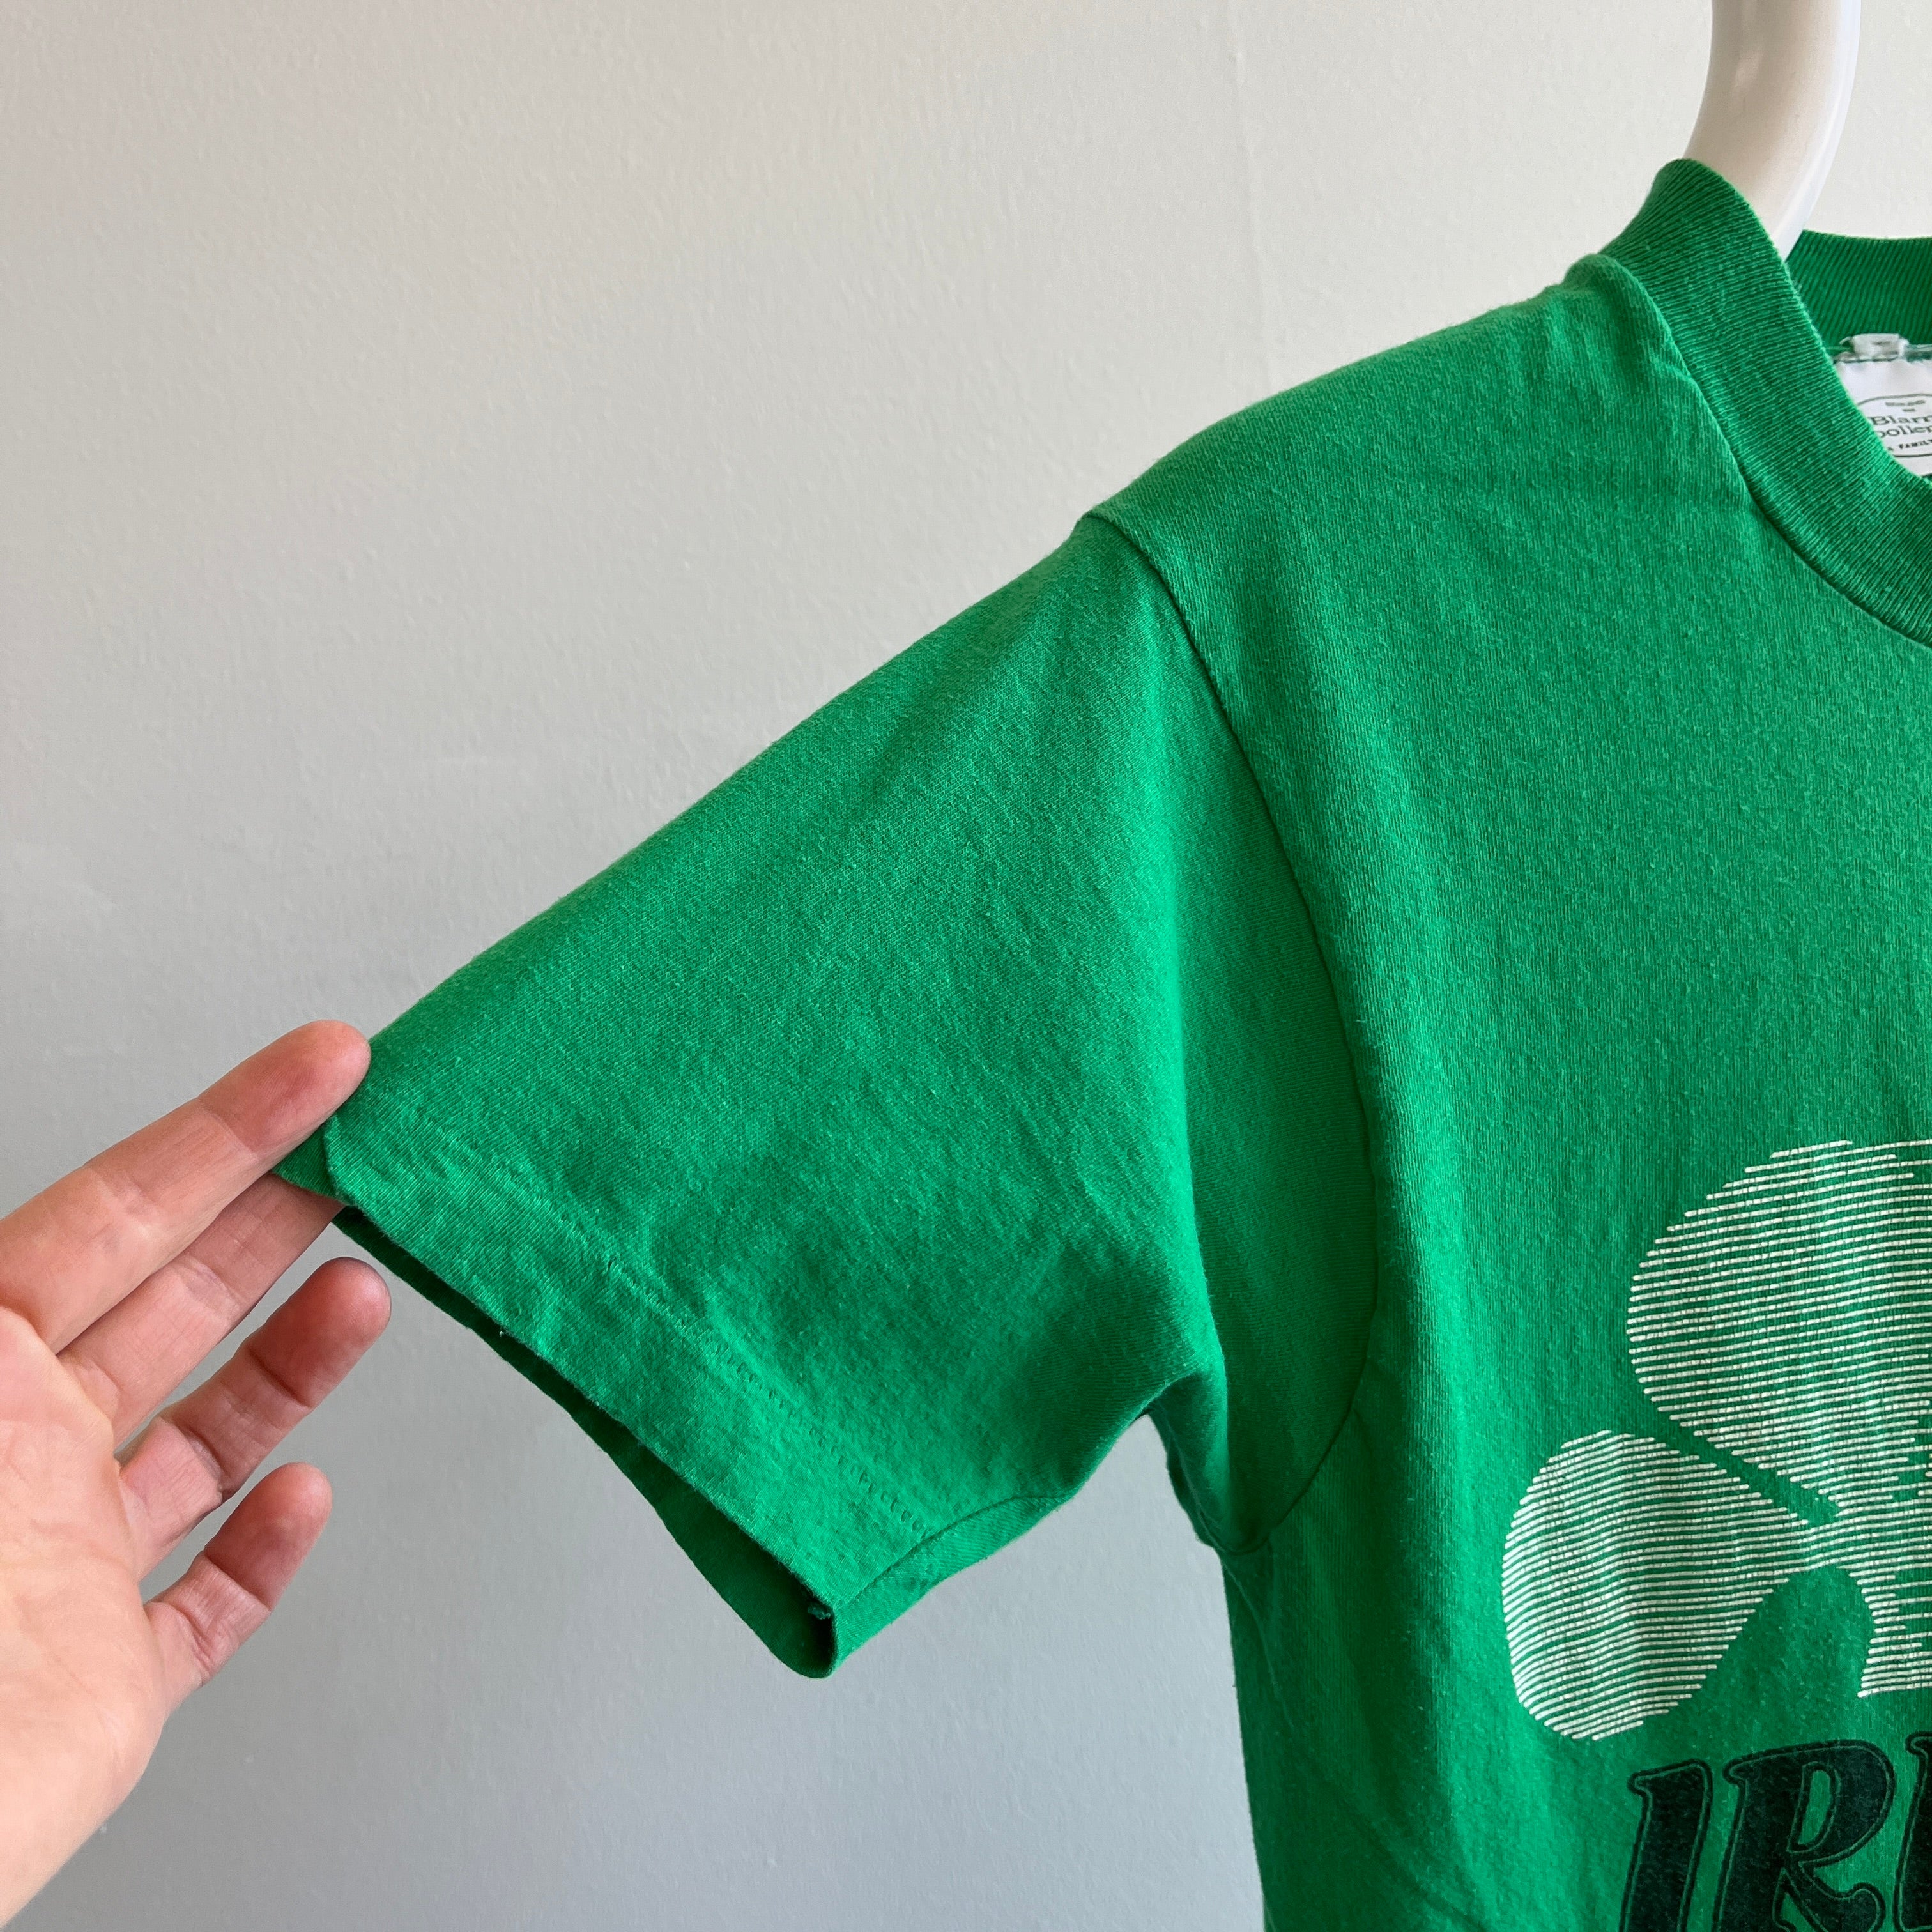 1980s Ireland T-Shirt